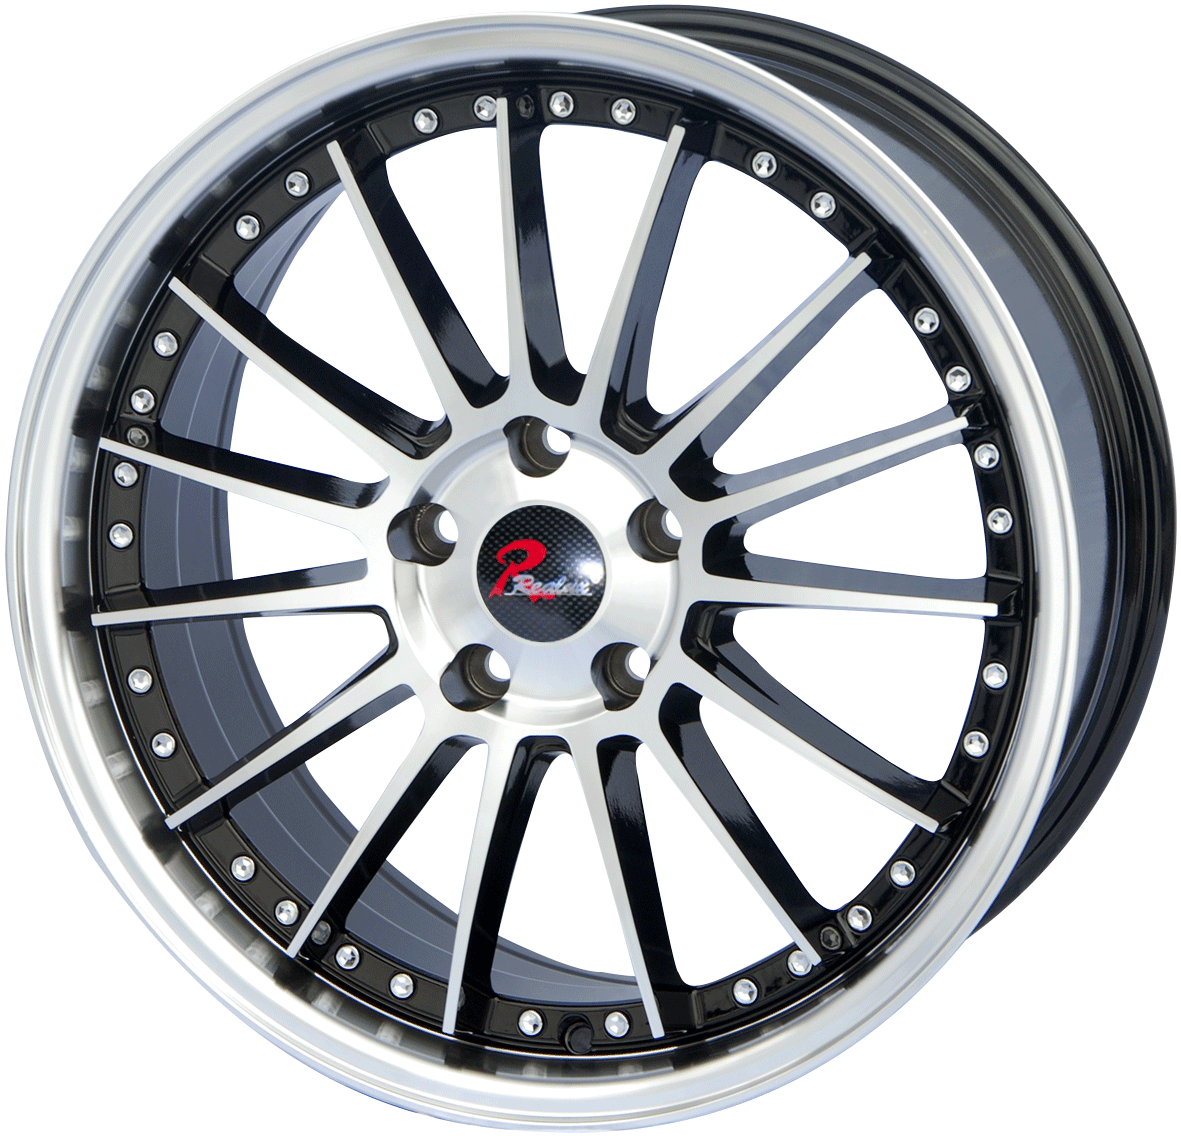 16×8.5 16×8 inch black machine face/chrome stud wheel rim